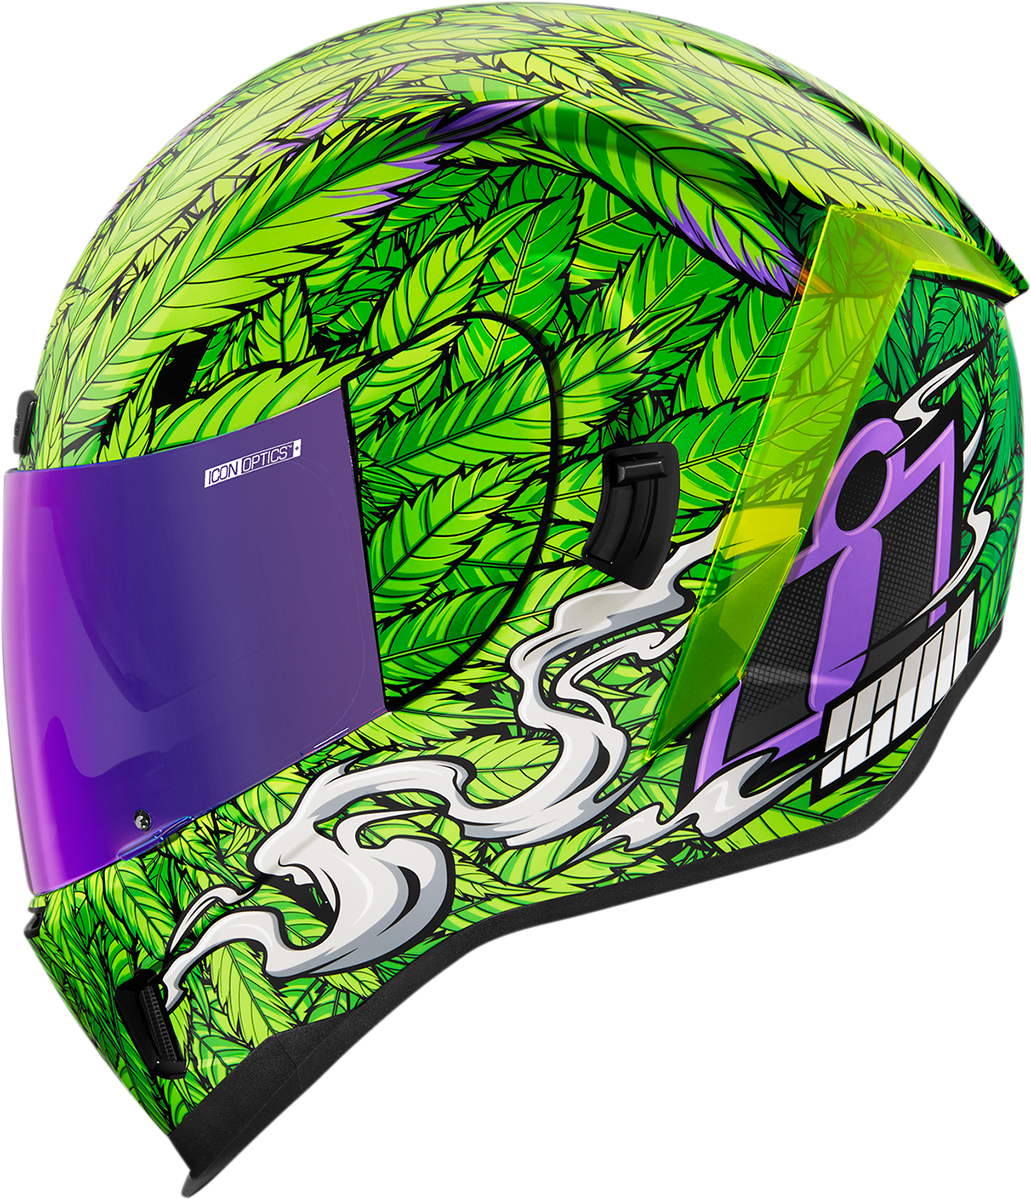 ICON Airform™ Helmet - Ritemind Glow™ - Green - Large 0101-14081